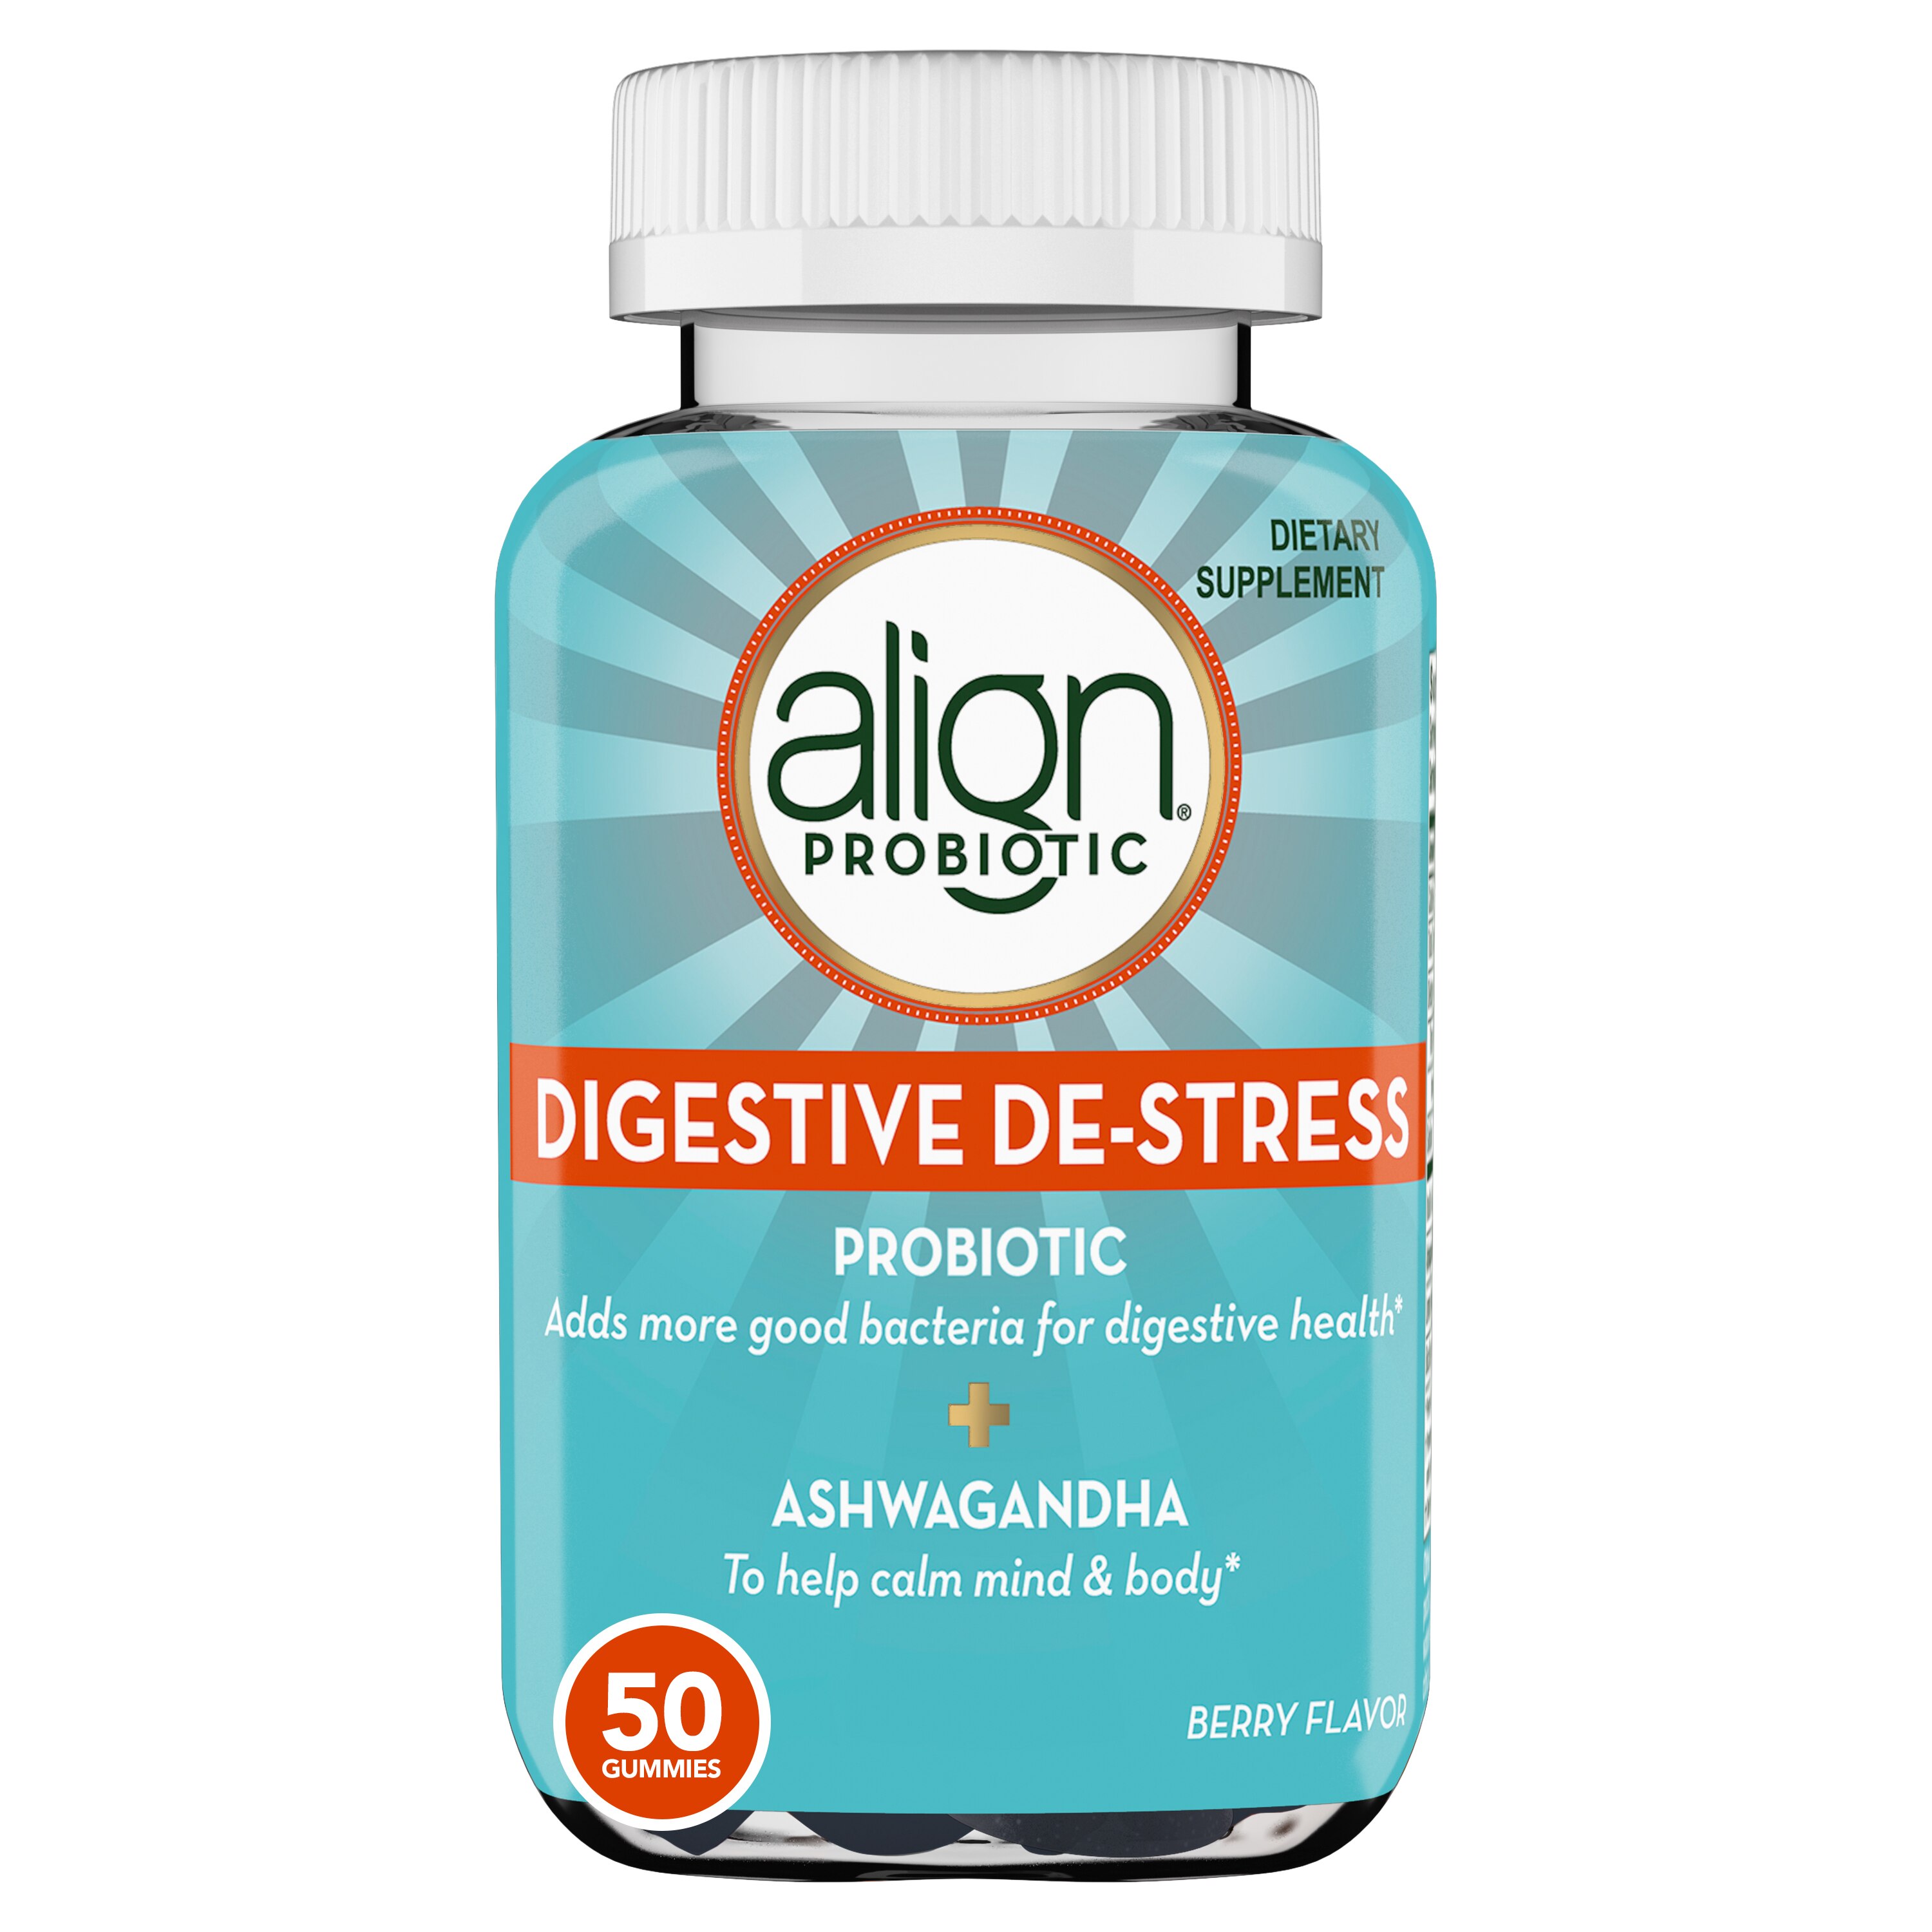 Align DIGESTIVE DE-STRESS Probiotic + Herbal Ashwagandha Supplement, Berry Flavor, 50 CT